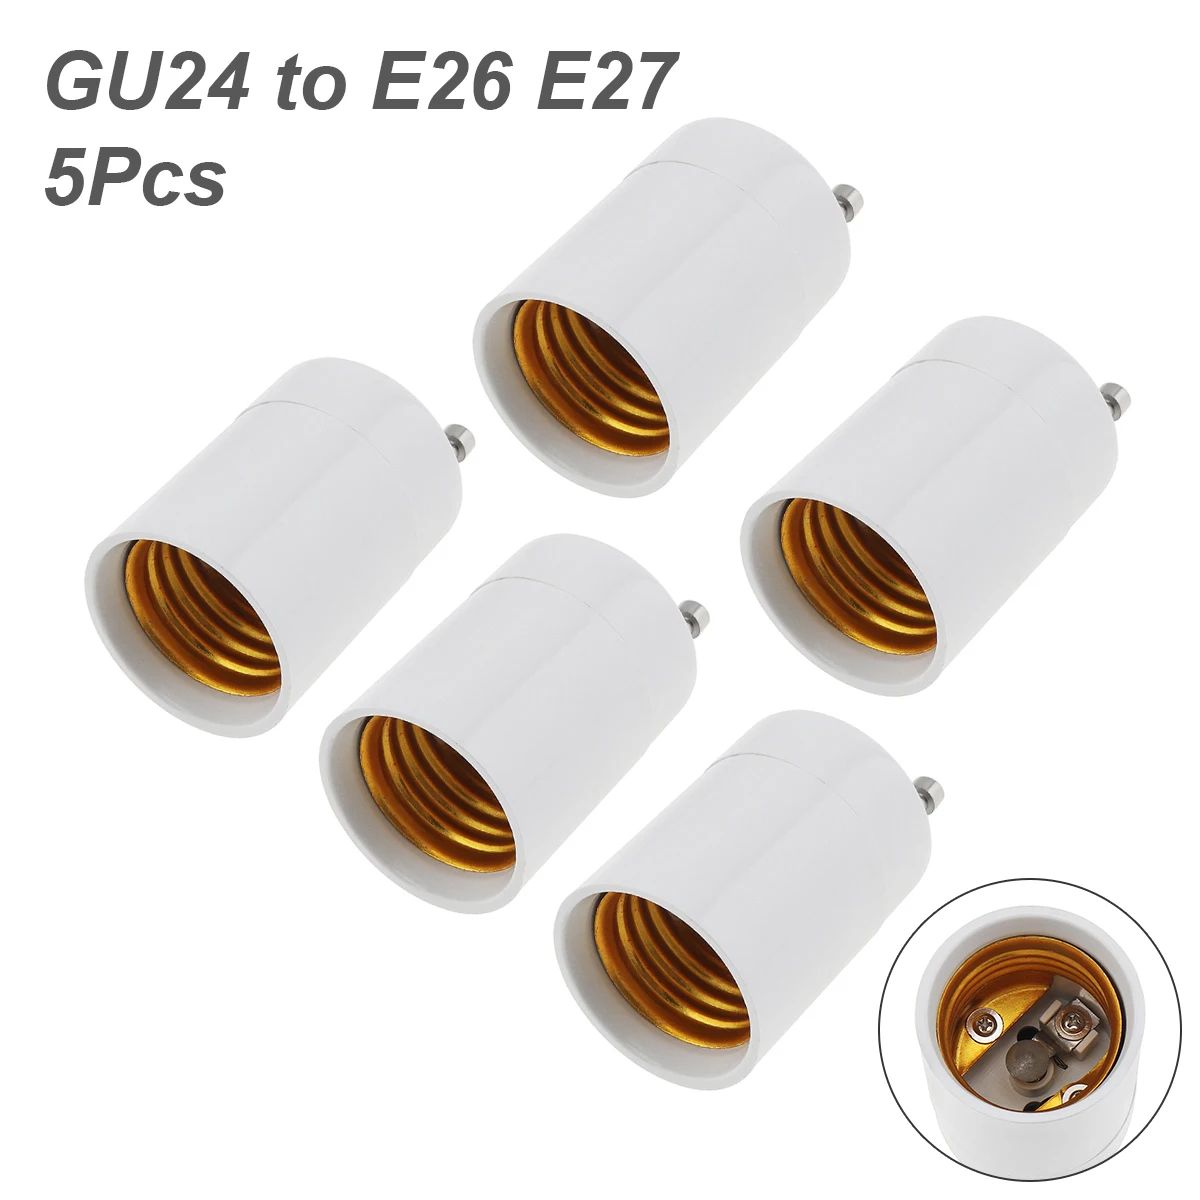 

5pcs GU24 to E26 E27 Socket Adapter Converter Converts GU24 Based Fixture to E26 E27 Standard Screw In Socket Changer